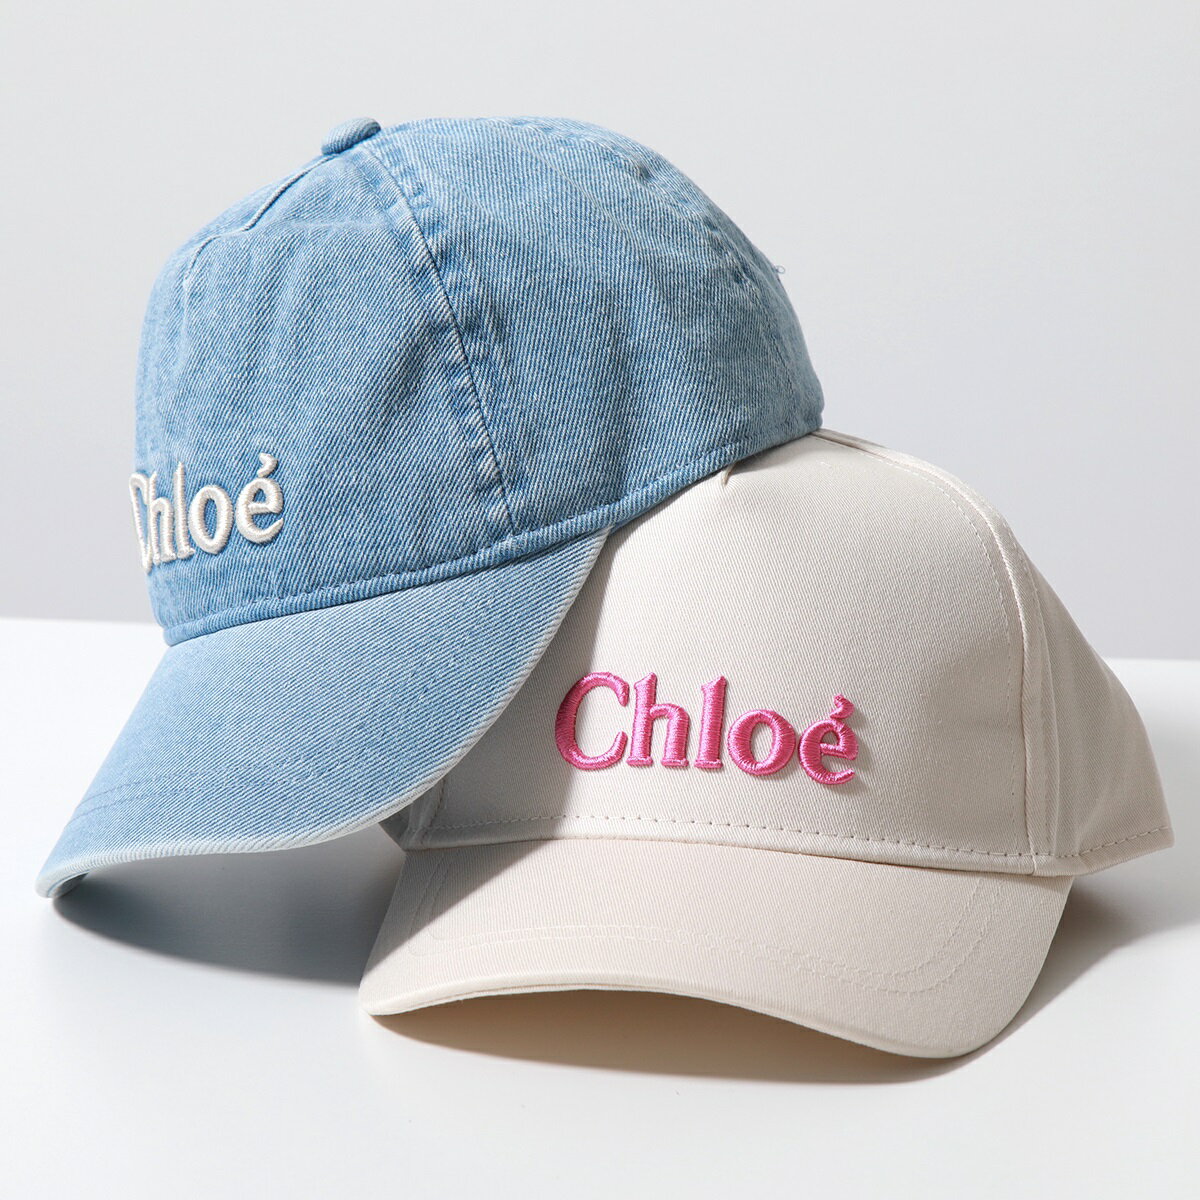 Chloe Kids クロエ キッズ べーズボールキャップ HEADWEAR ACCESSORY C20049 C20183 ガールズ ロゴ刺繍 帽子 カラー2色